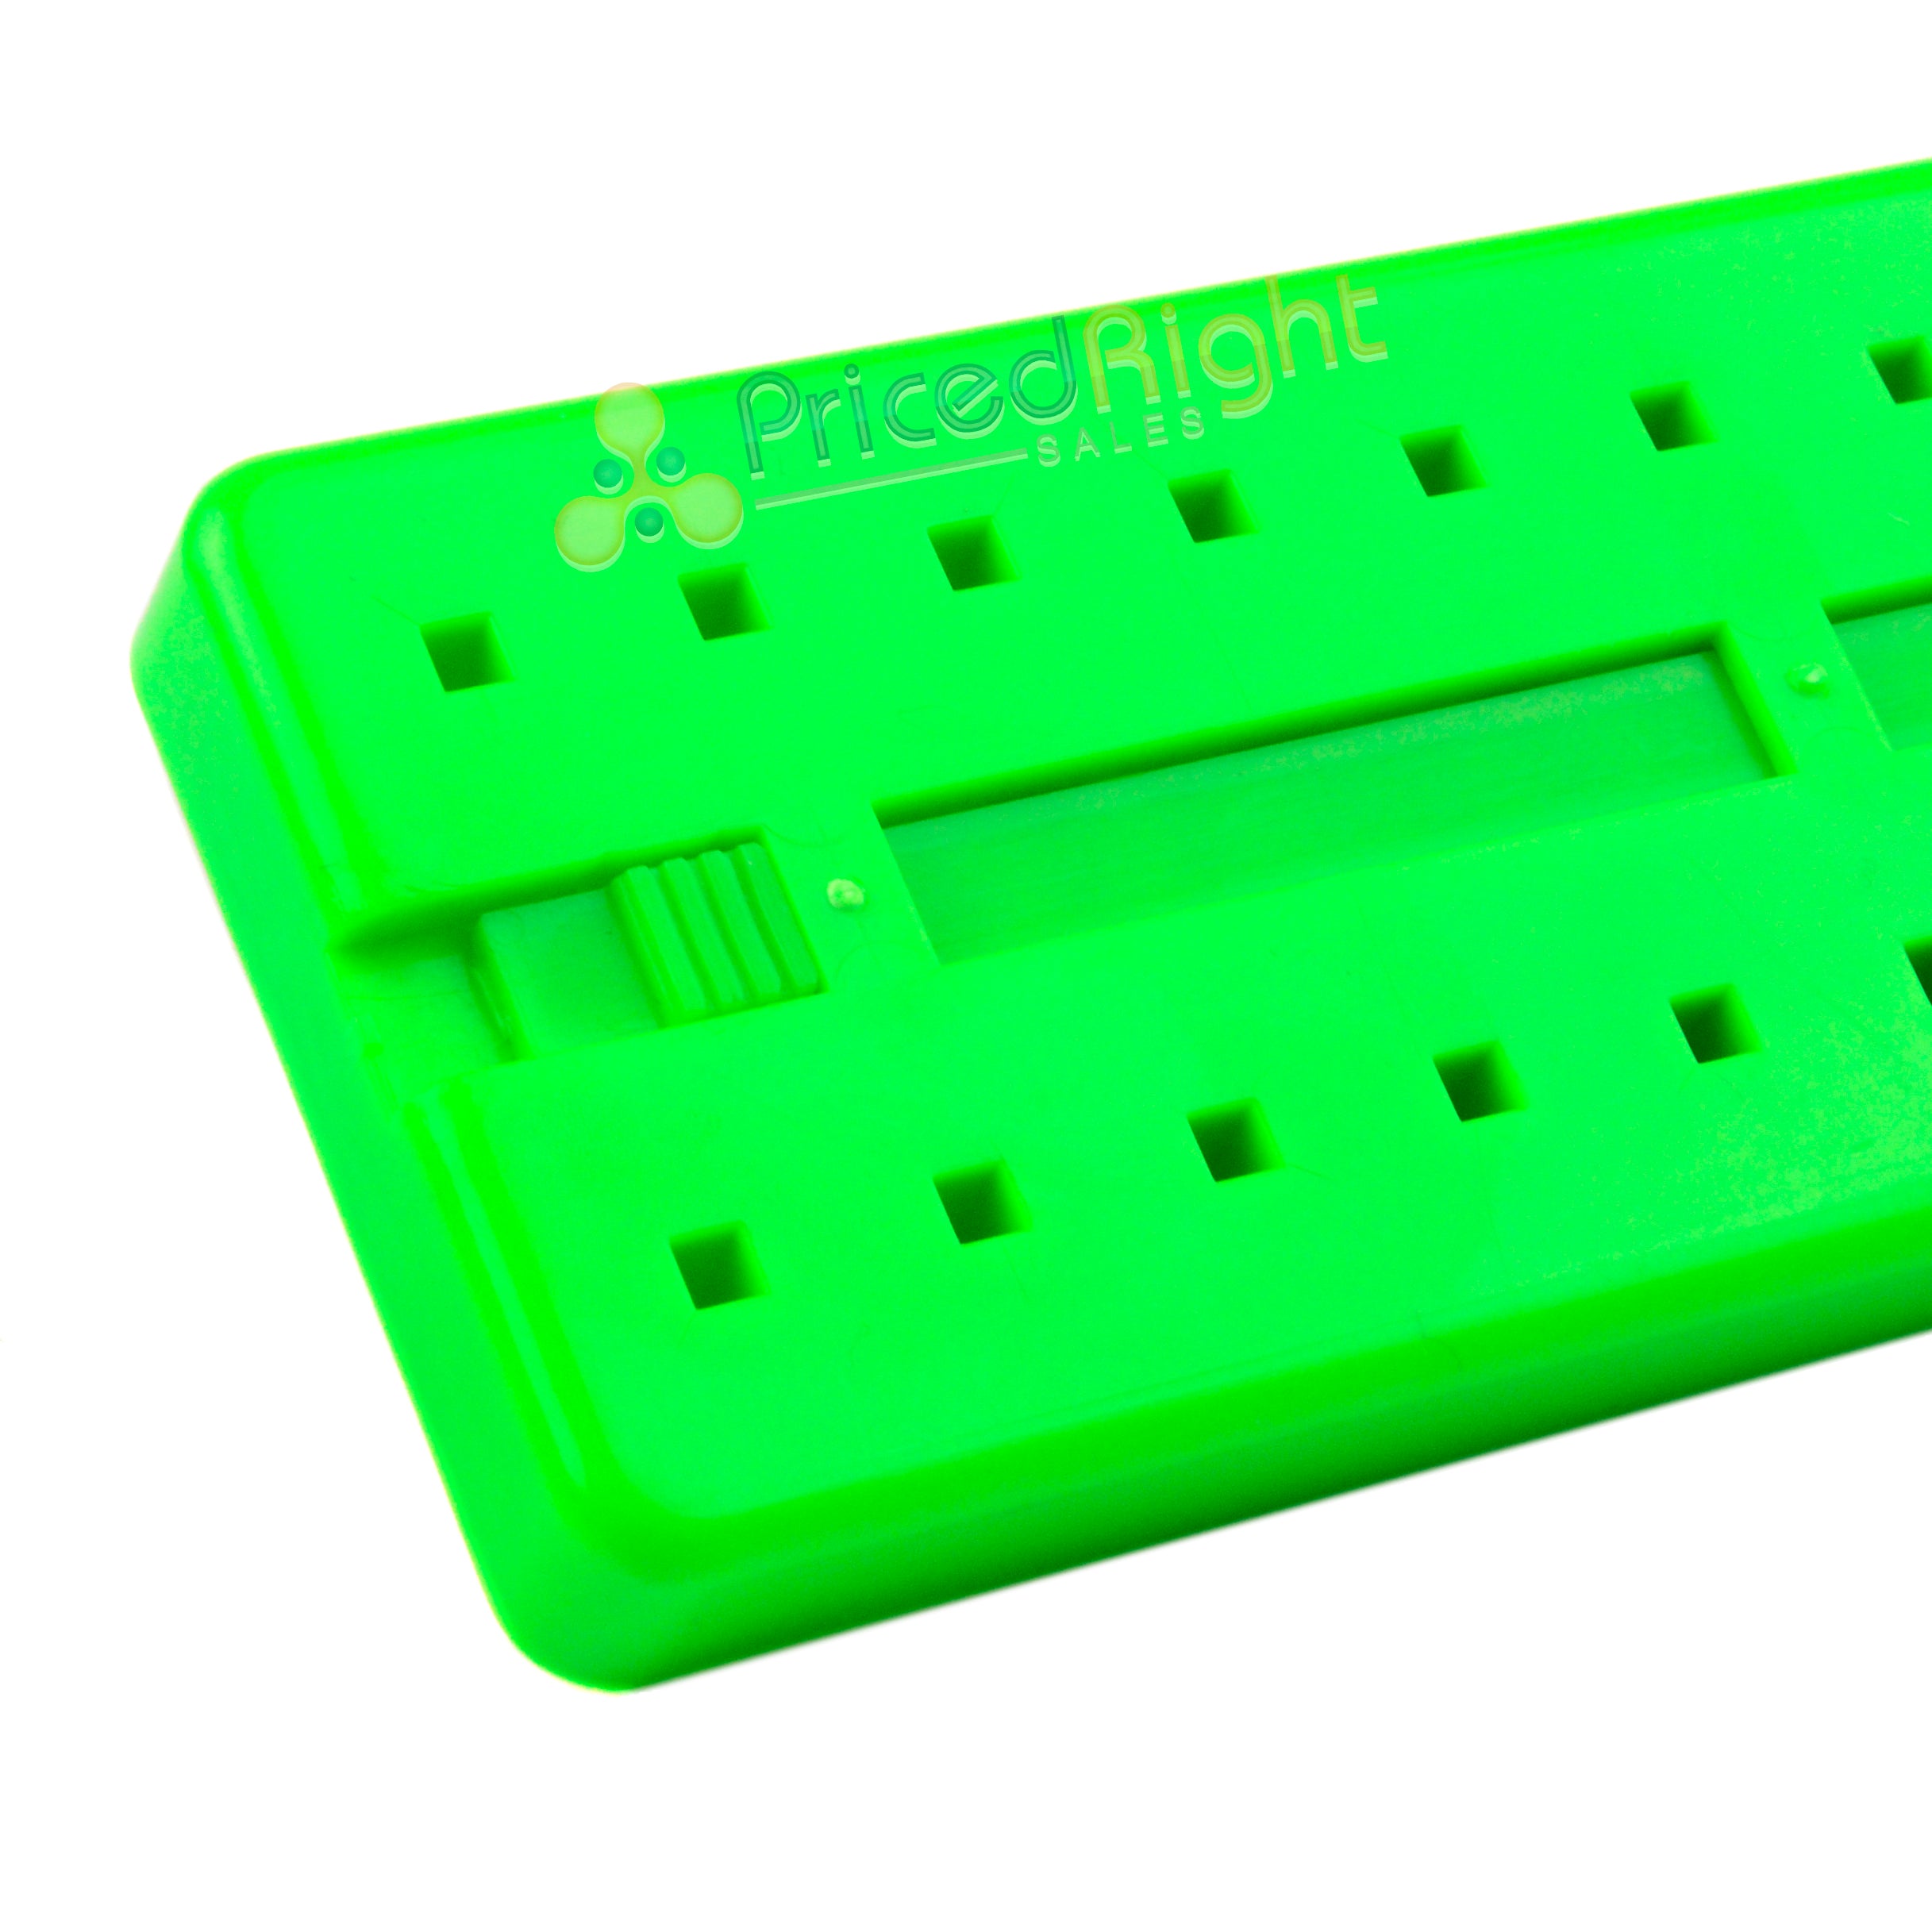 1/4" Socket Tray Holder Organizer Metric SAE Adjustable Universal Green 67260